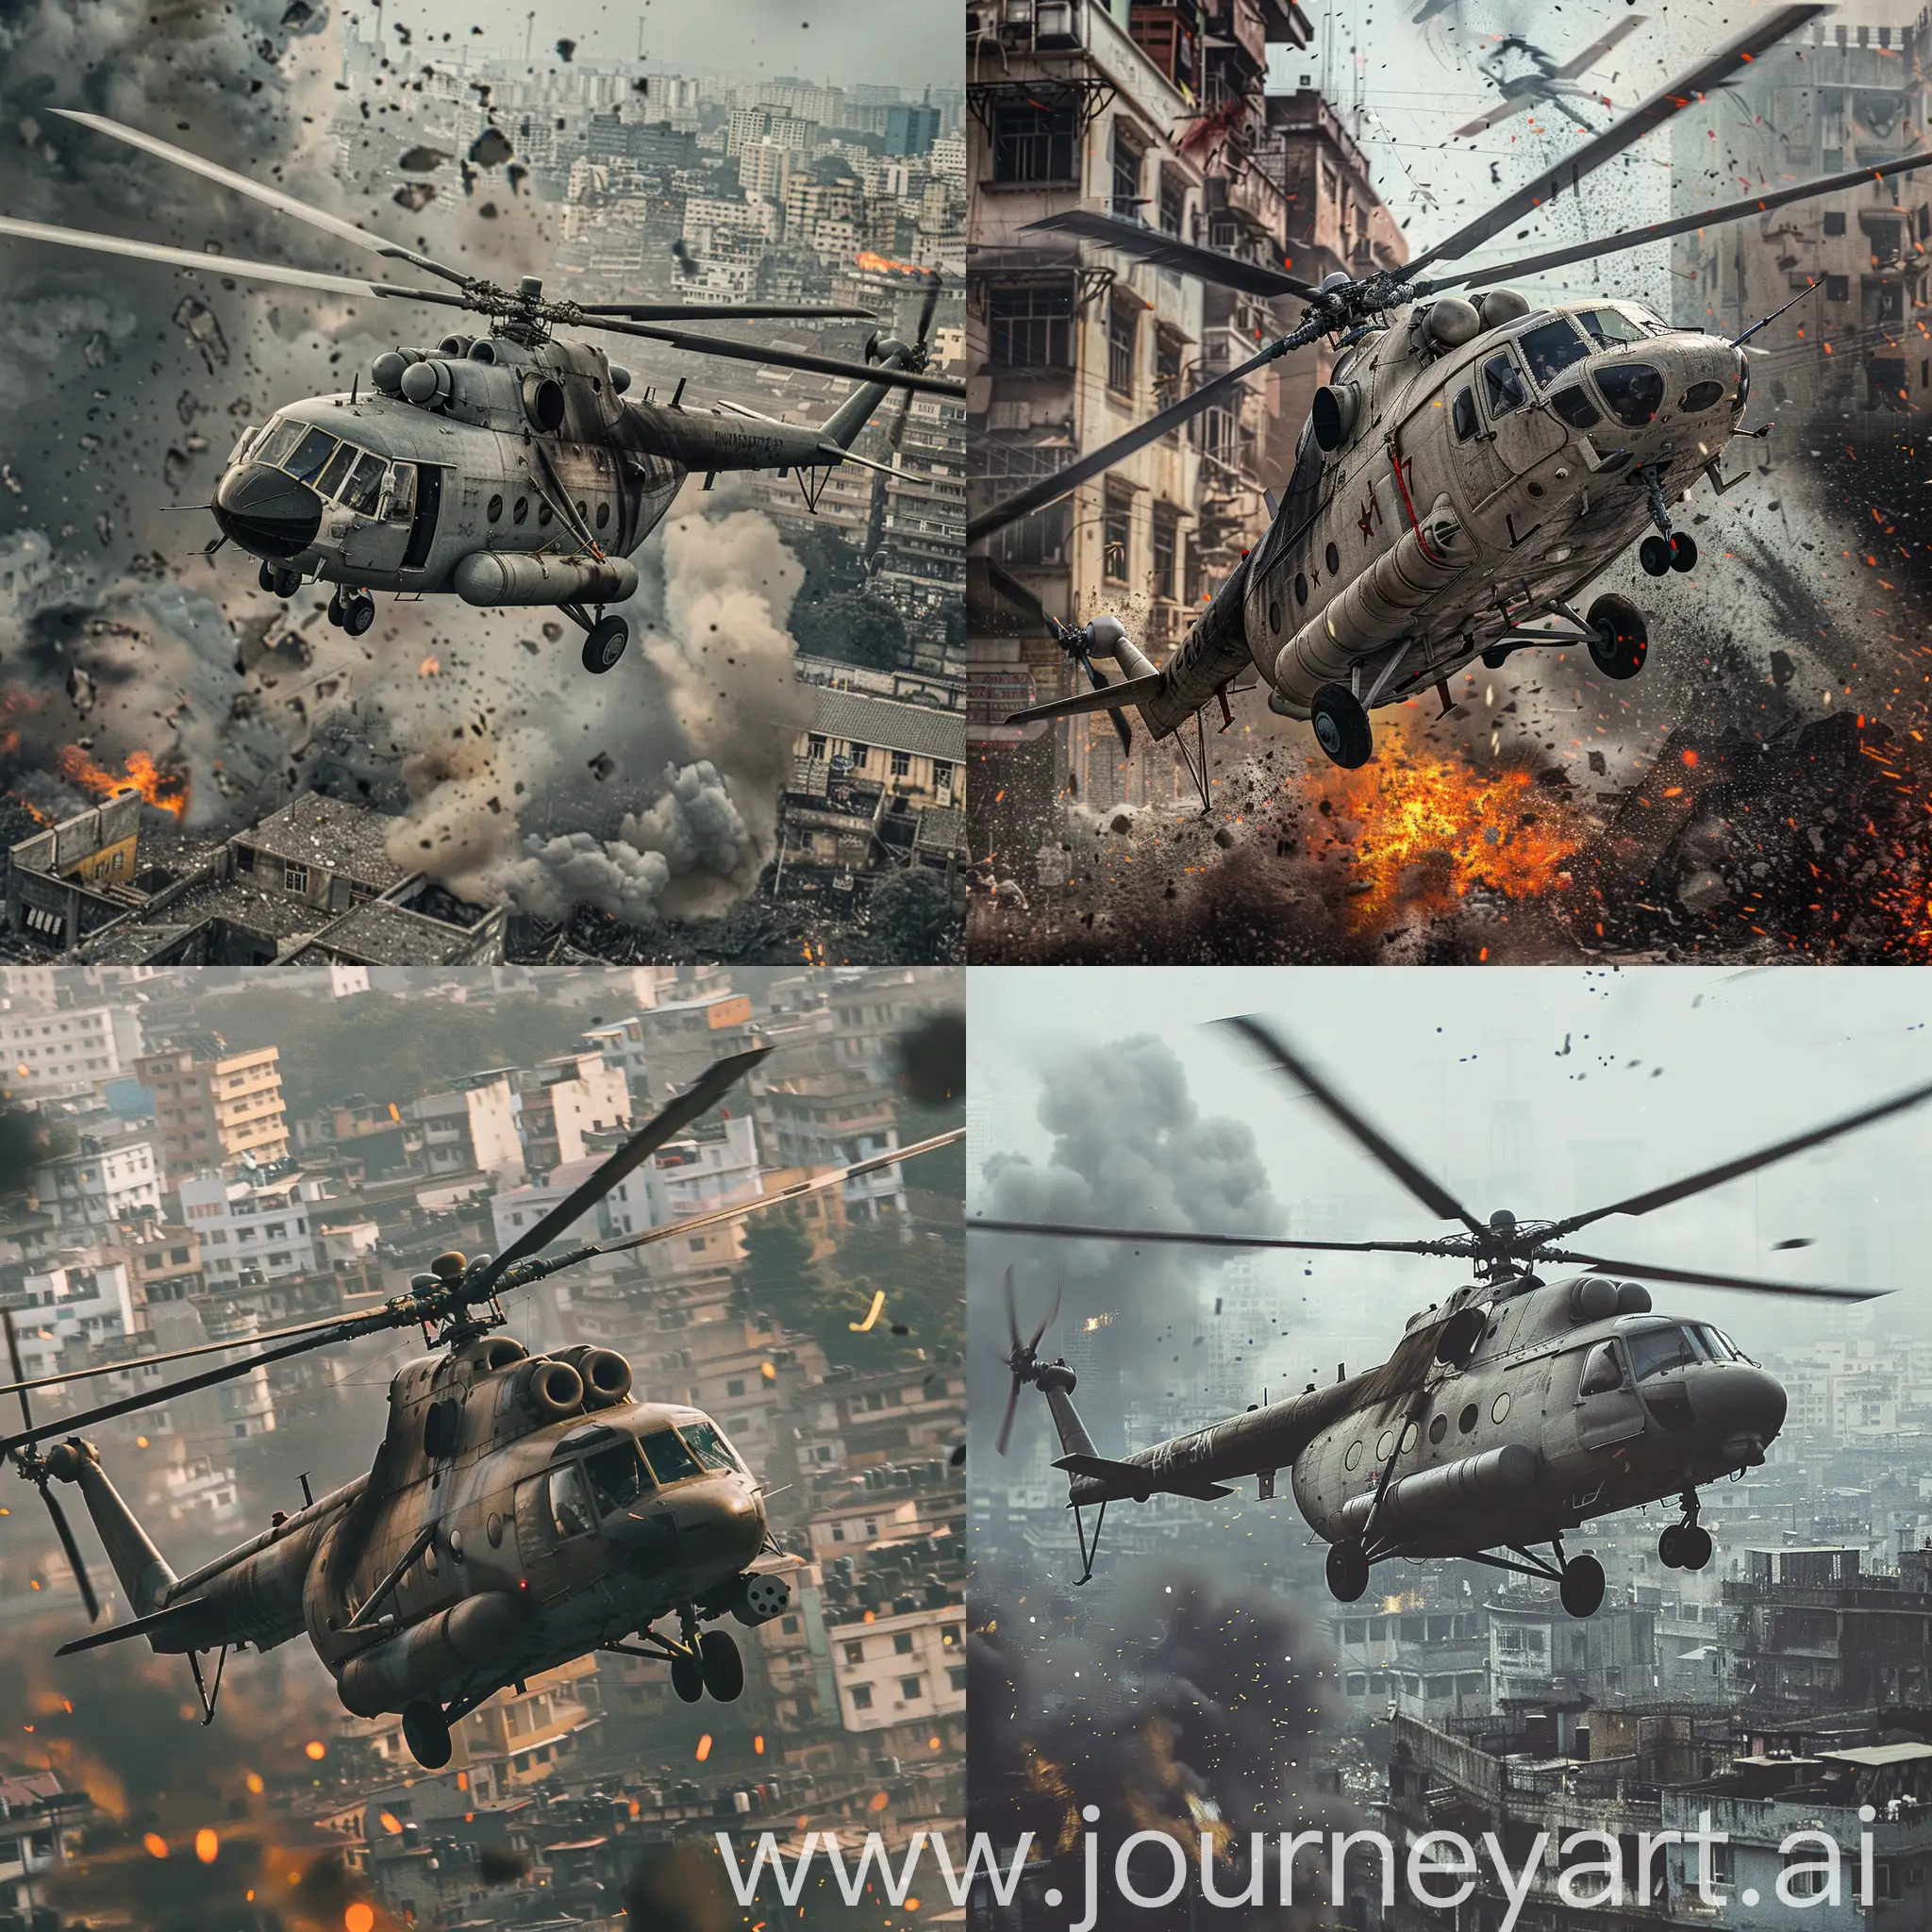 Mi17-Helicopter-Emergency-Landing-in-Kolkata-Amidst-Heavy-Gunfire